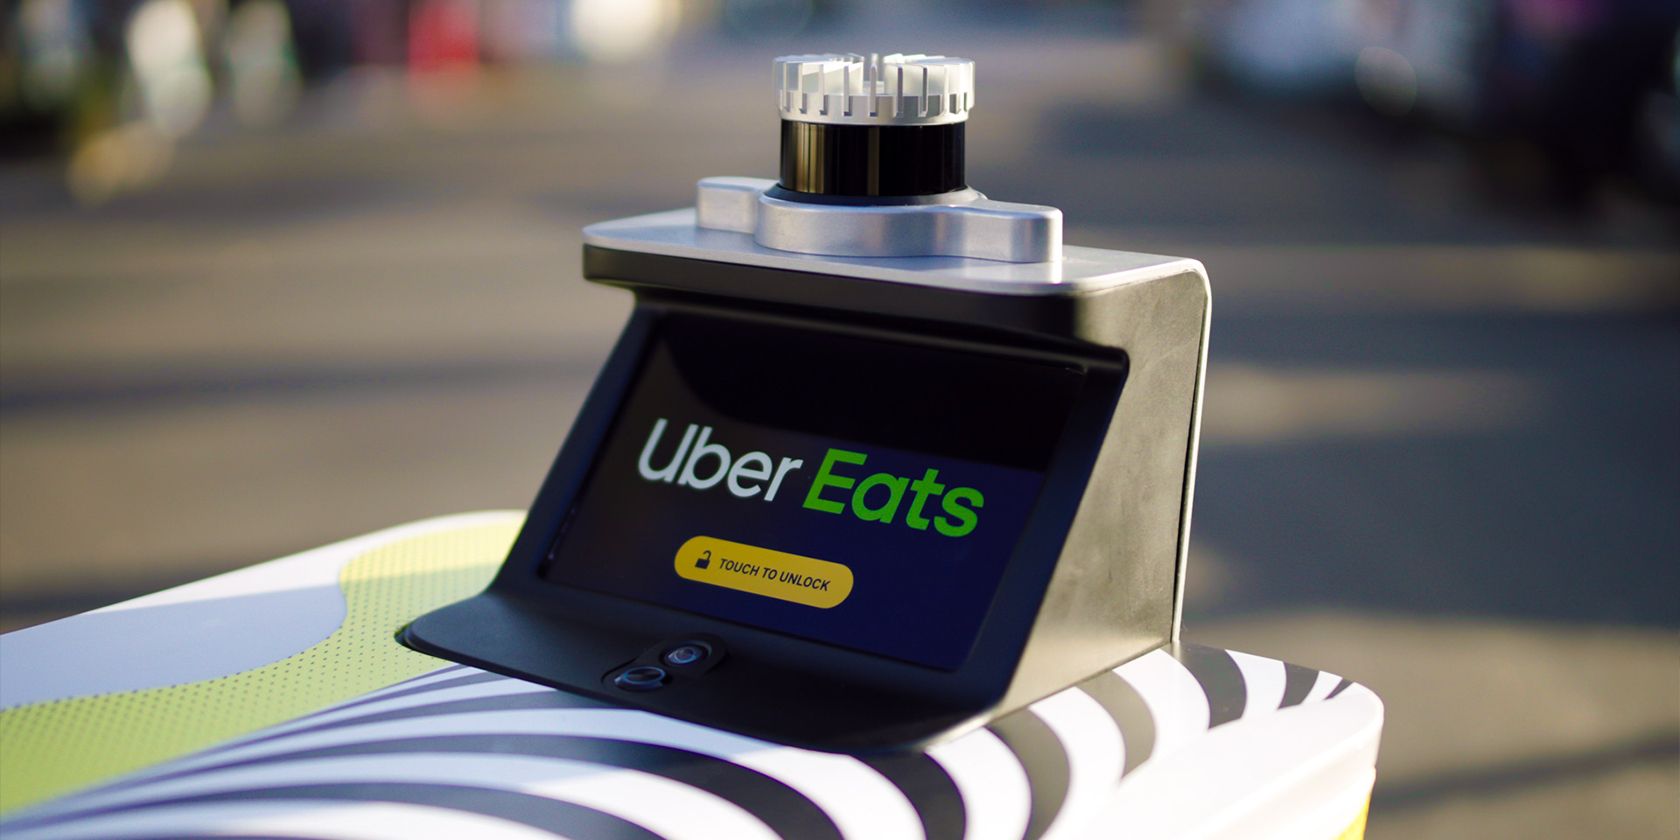 Uber Eats Screen With LIDAR